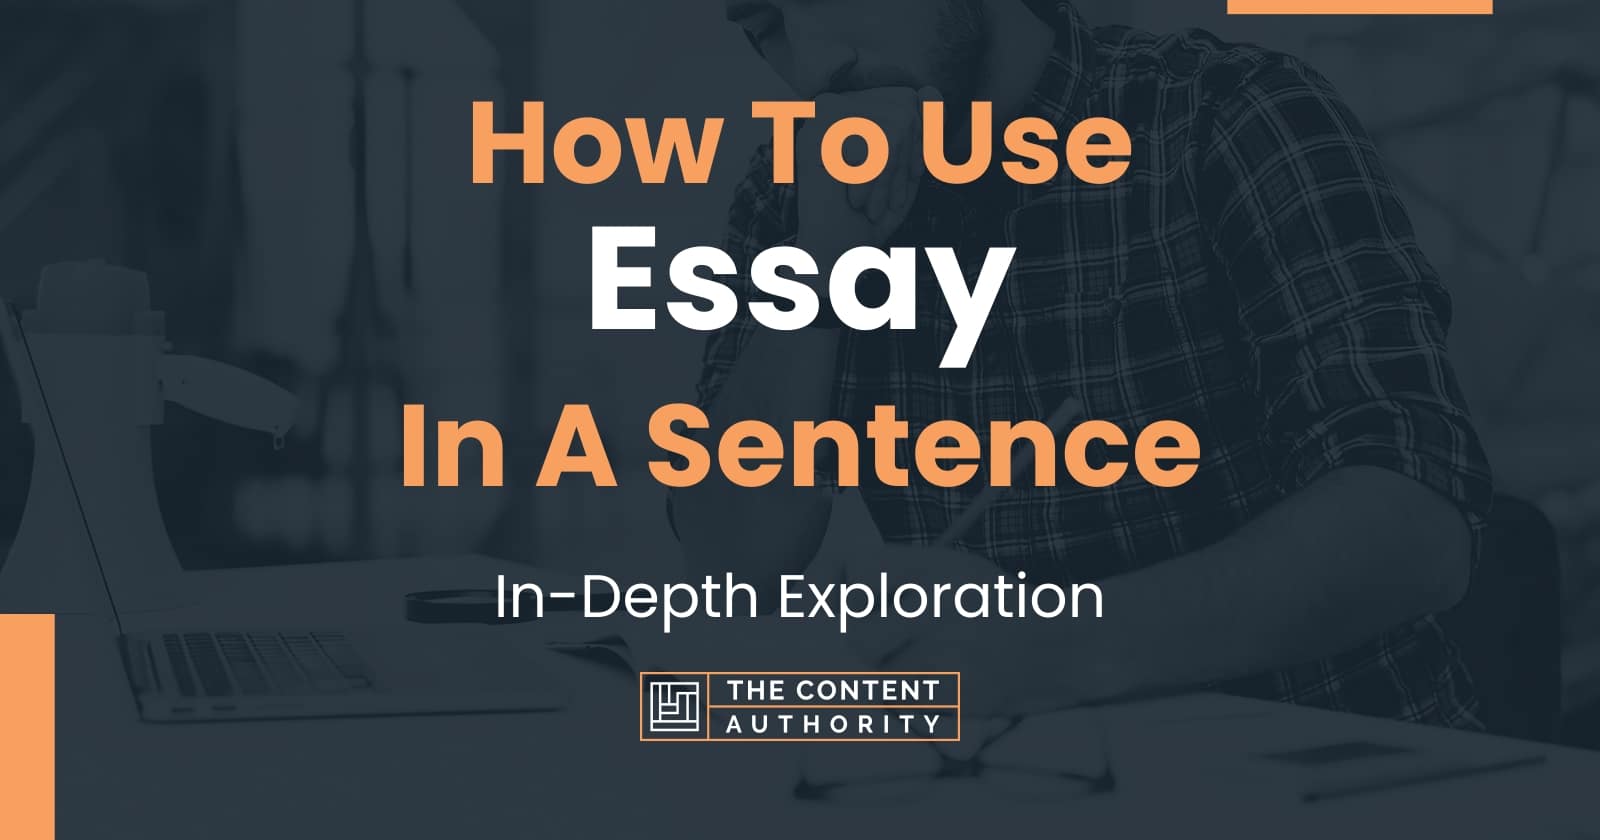 a sentence using essay